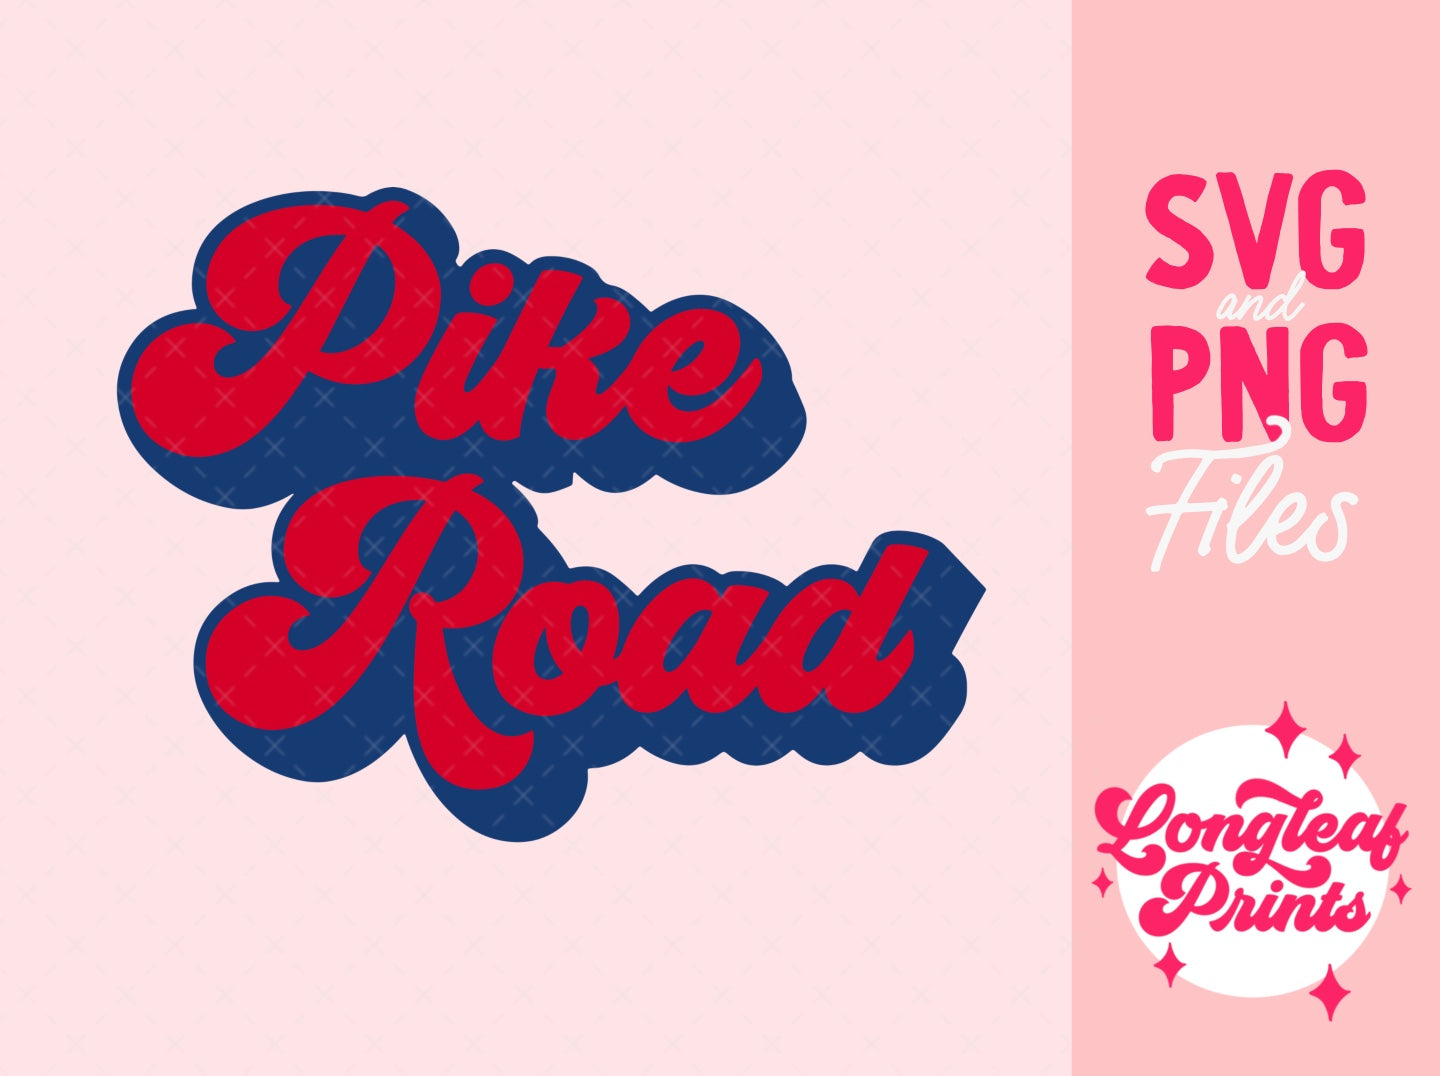 Pike Road Alabama Retro SVG Digital Download Design File